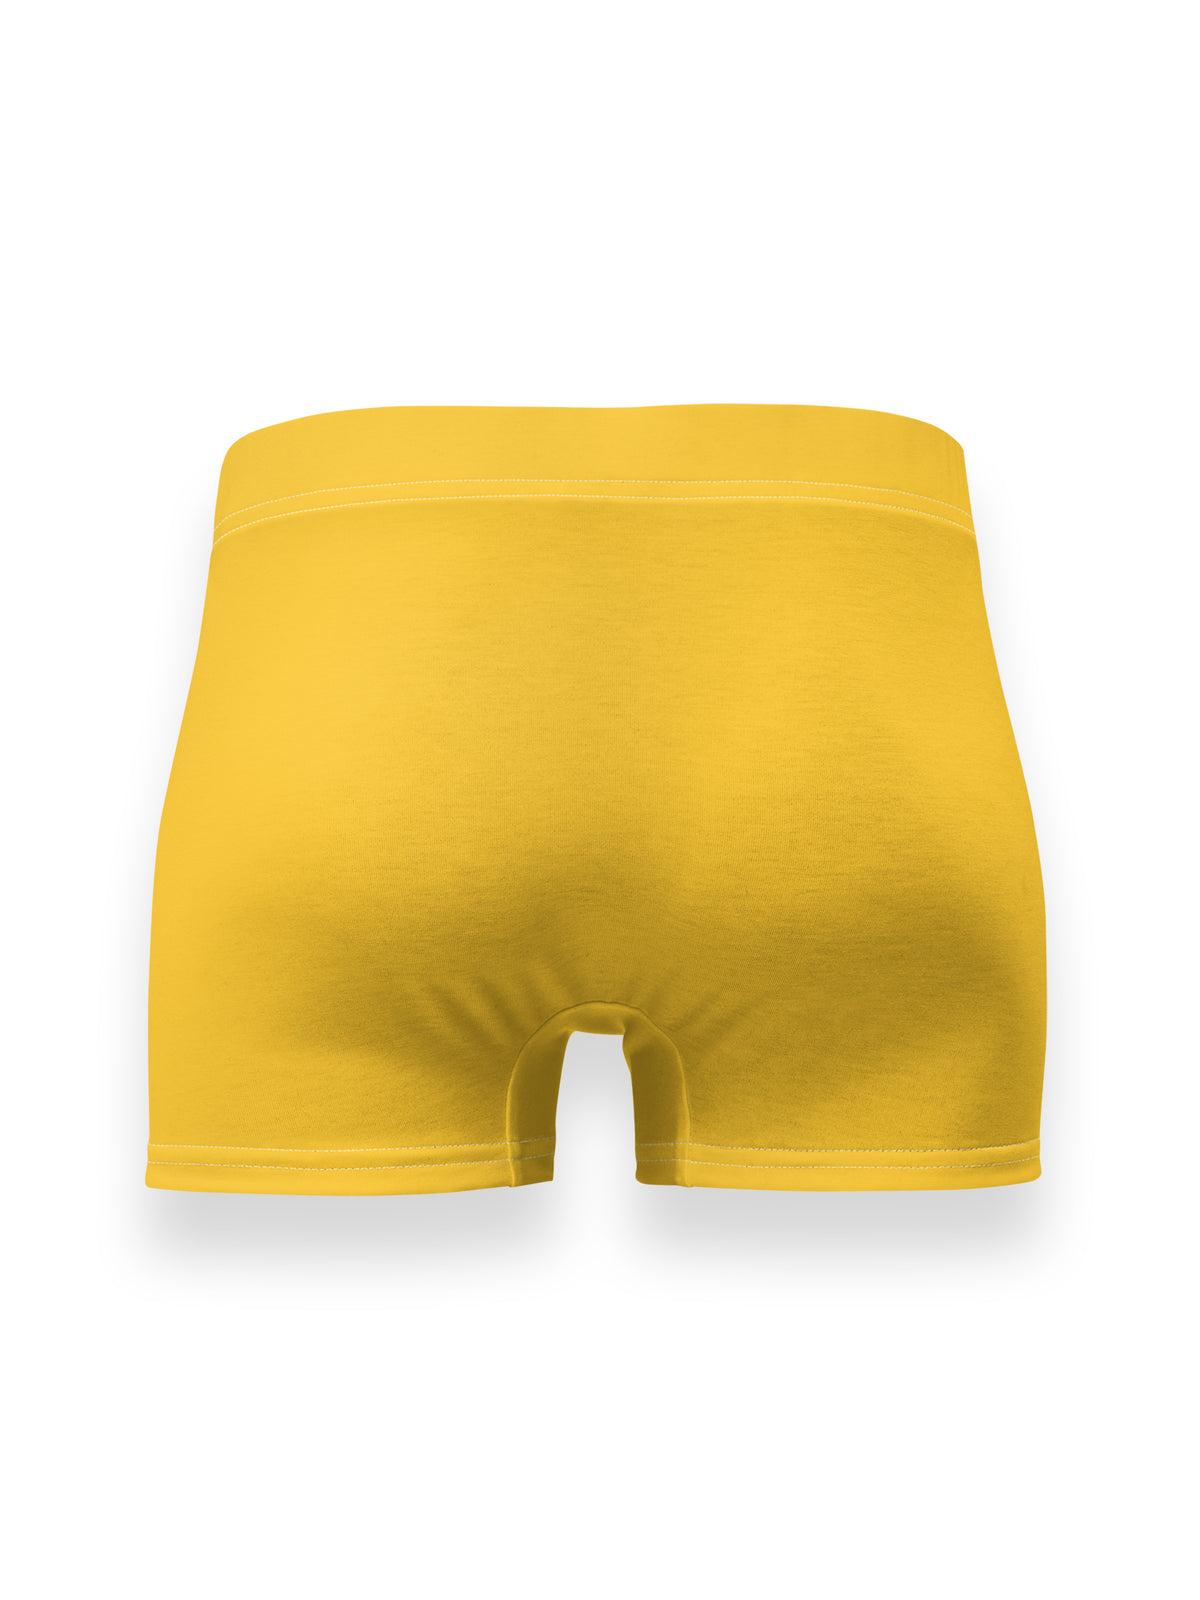 Unisex Boxer Briefs Yellow